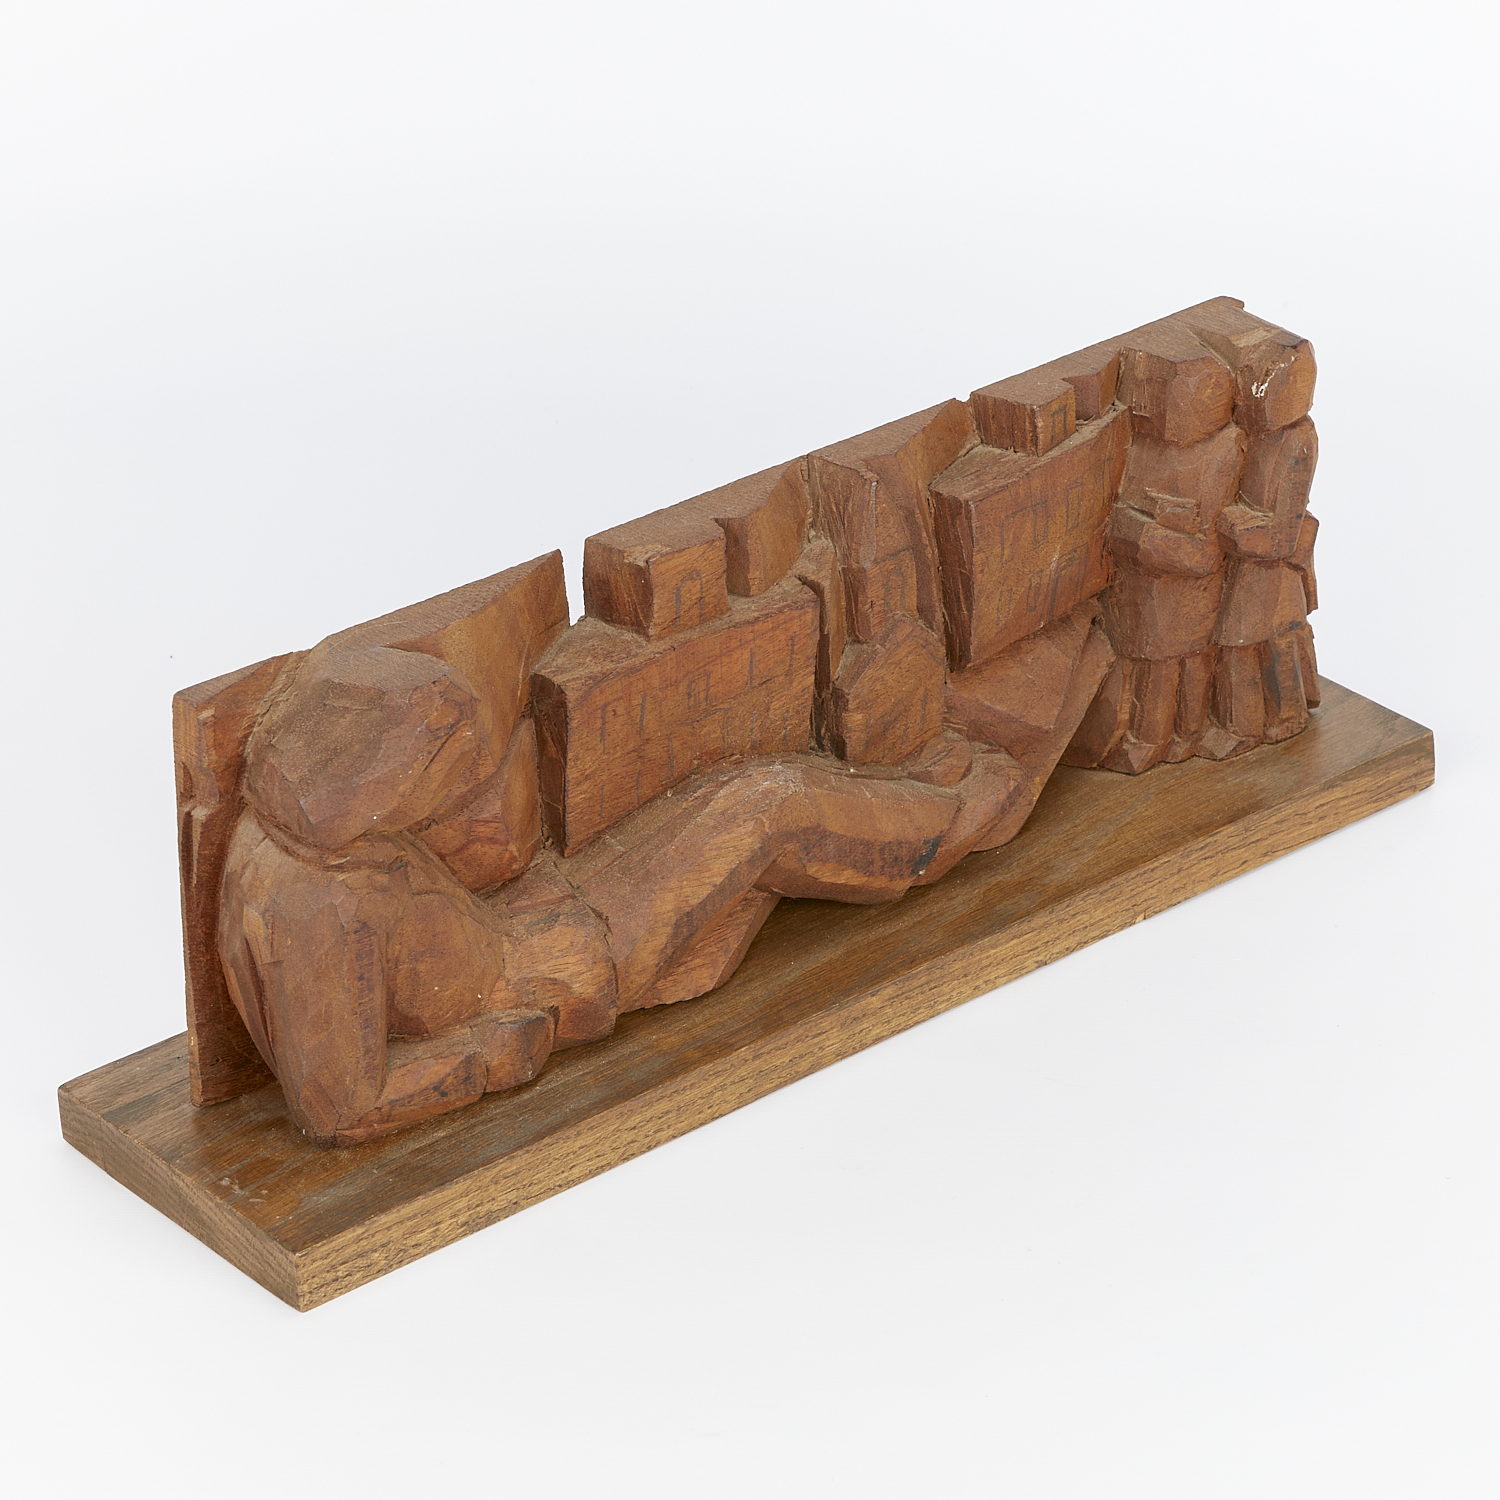 John Rood Carved Wooden Sculpture - Image 7 of 10